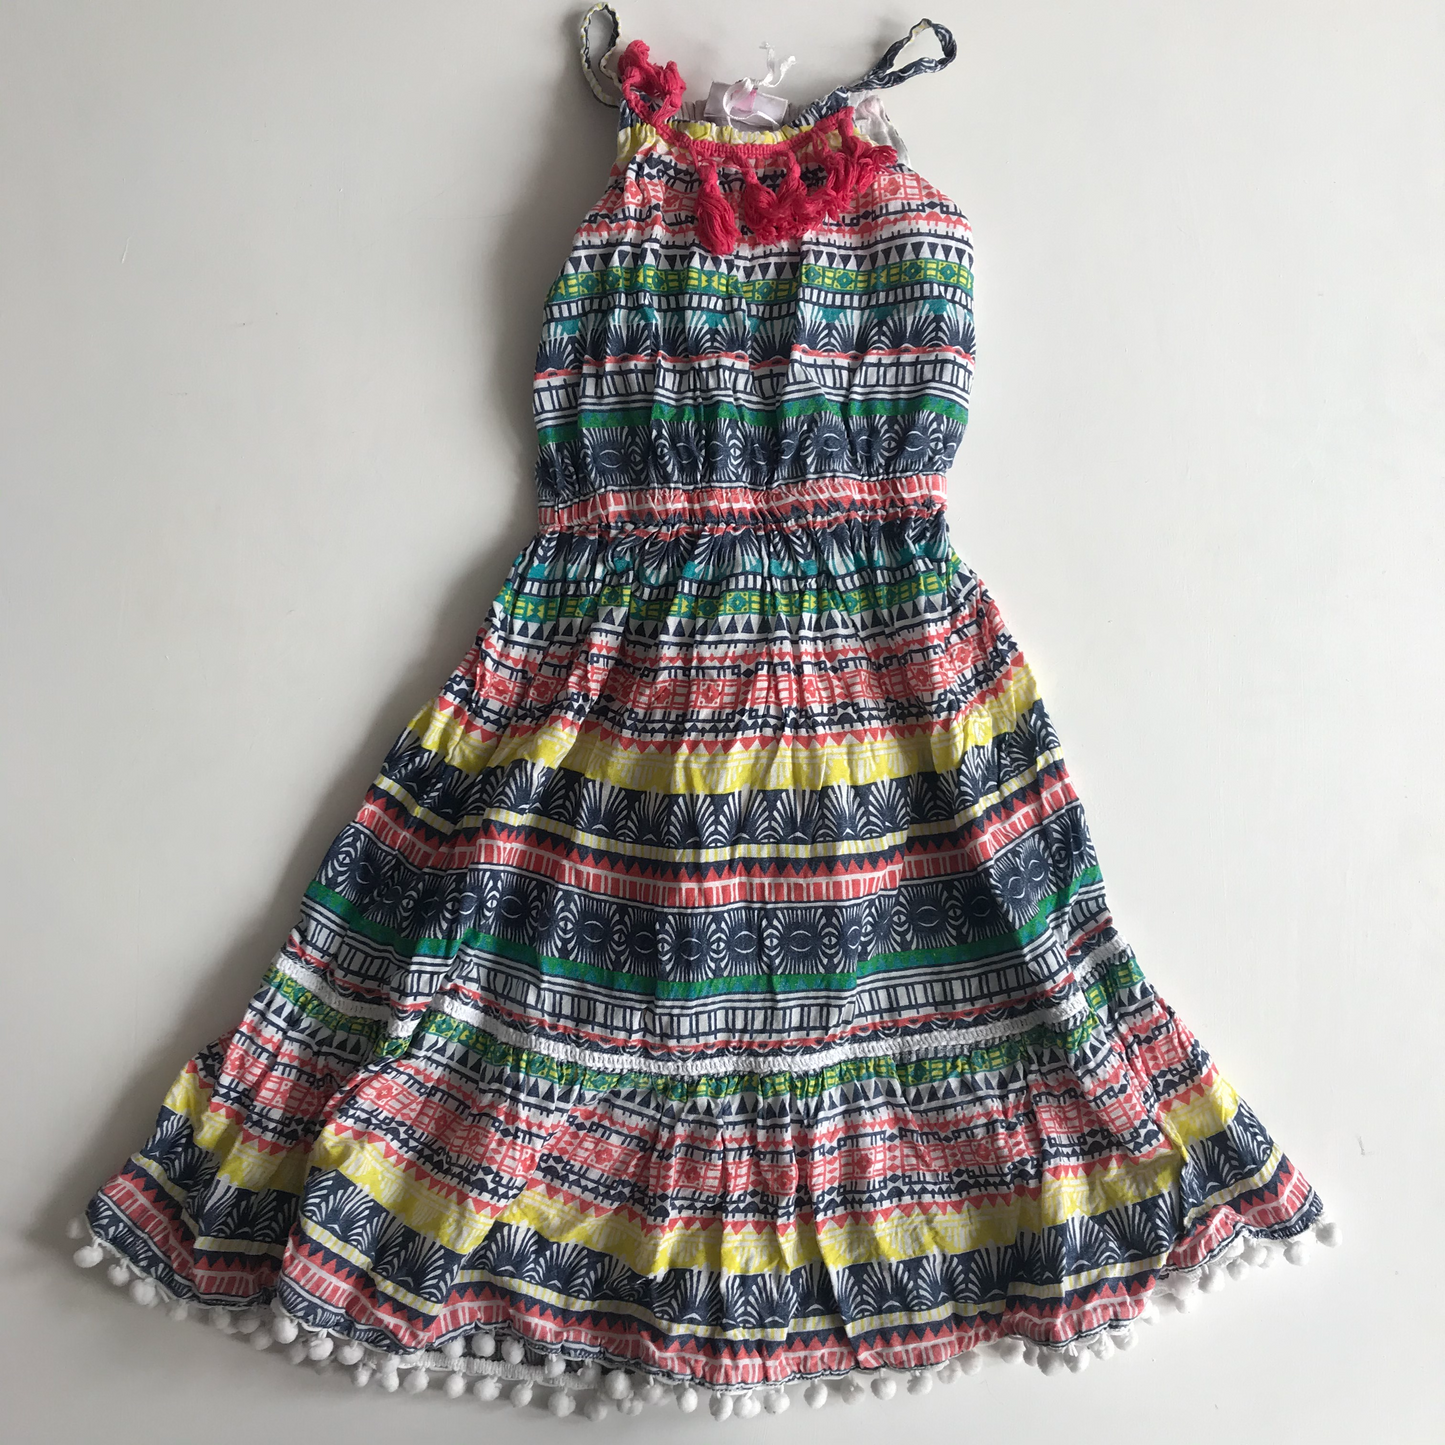 Dress - Multipattern & tassel Detail - Age 6